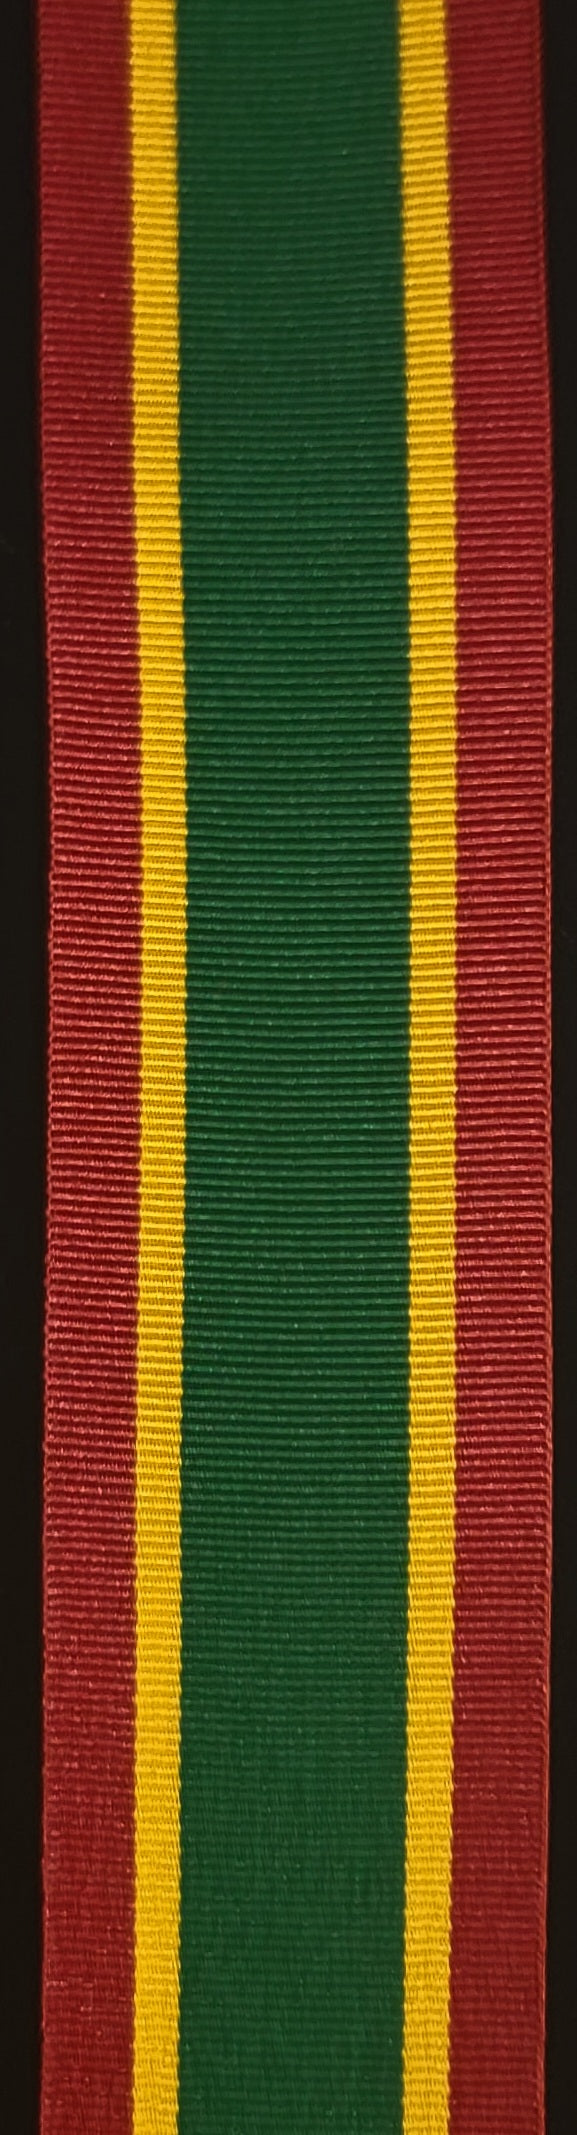 Ribbon,  Canadian Army Cadet Long Service Medal